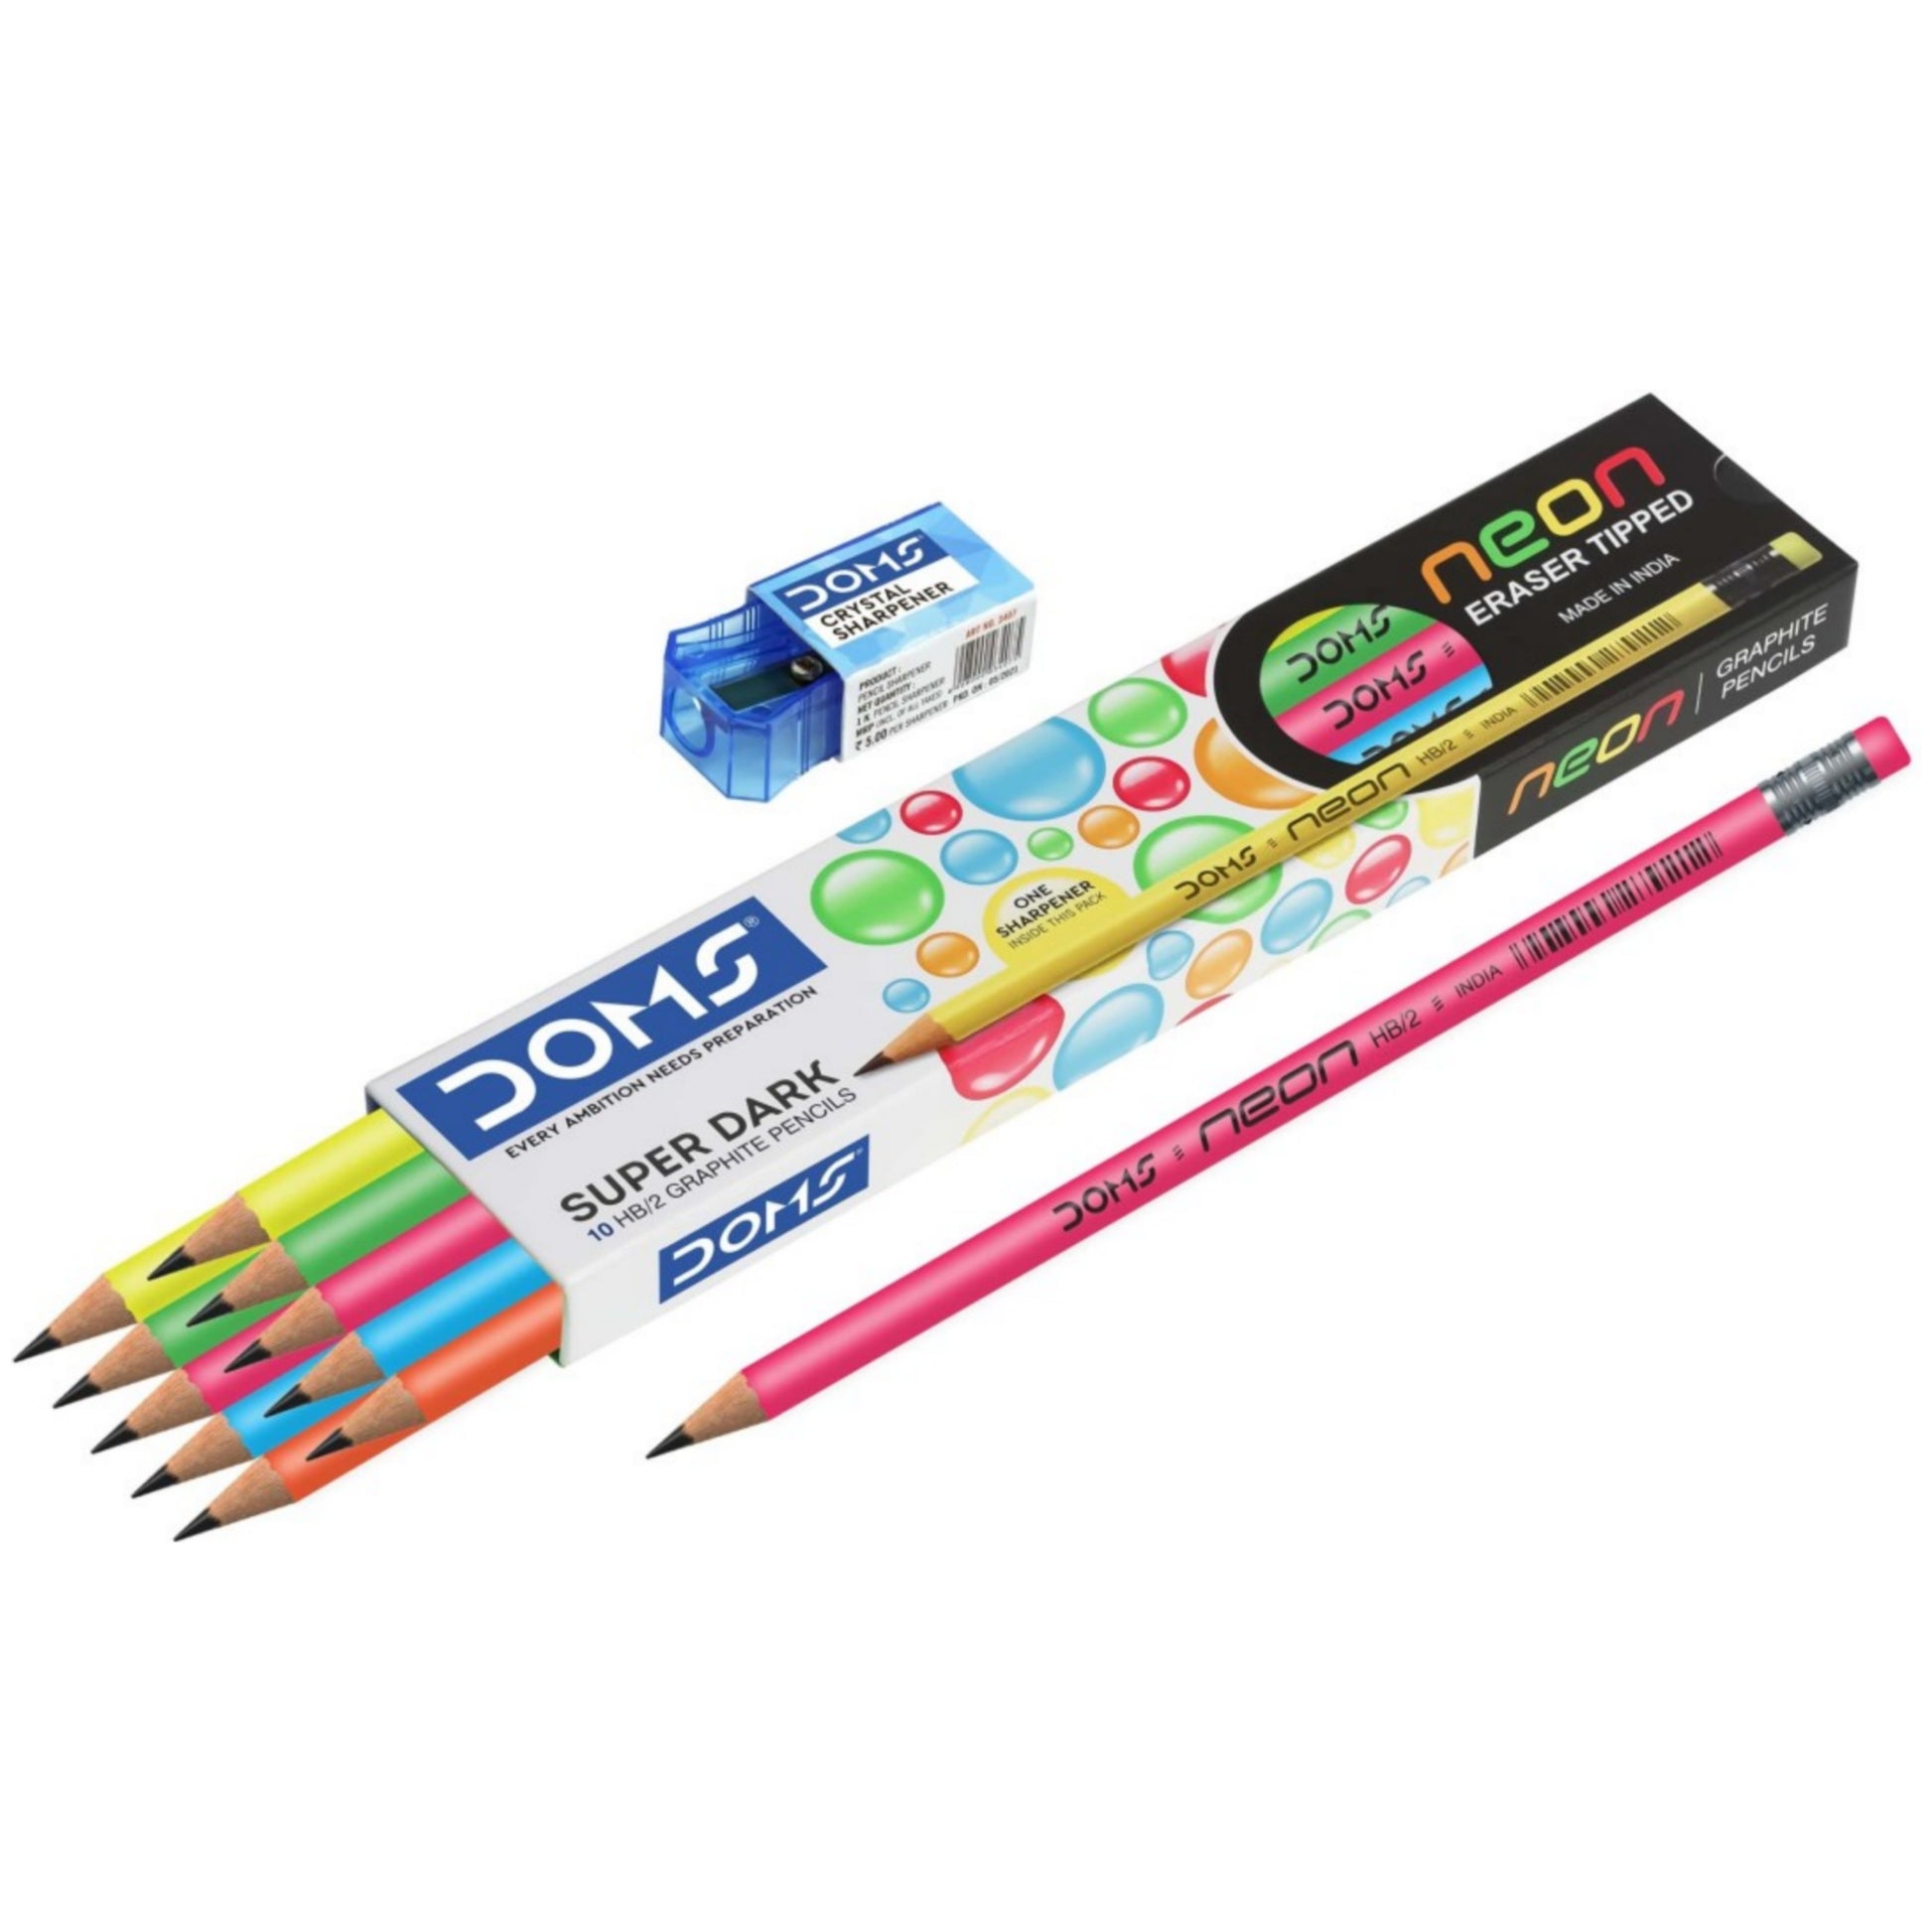 Doms Groove HB/2 Super Dark Graphite Pencil Box Pack, Innovative Groove  For Perfect Grip, Free Eraser & Sharpner Inside